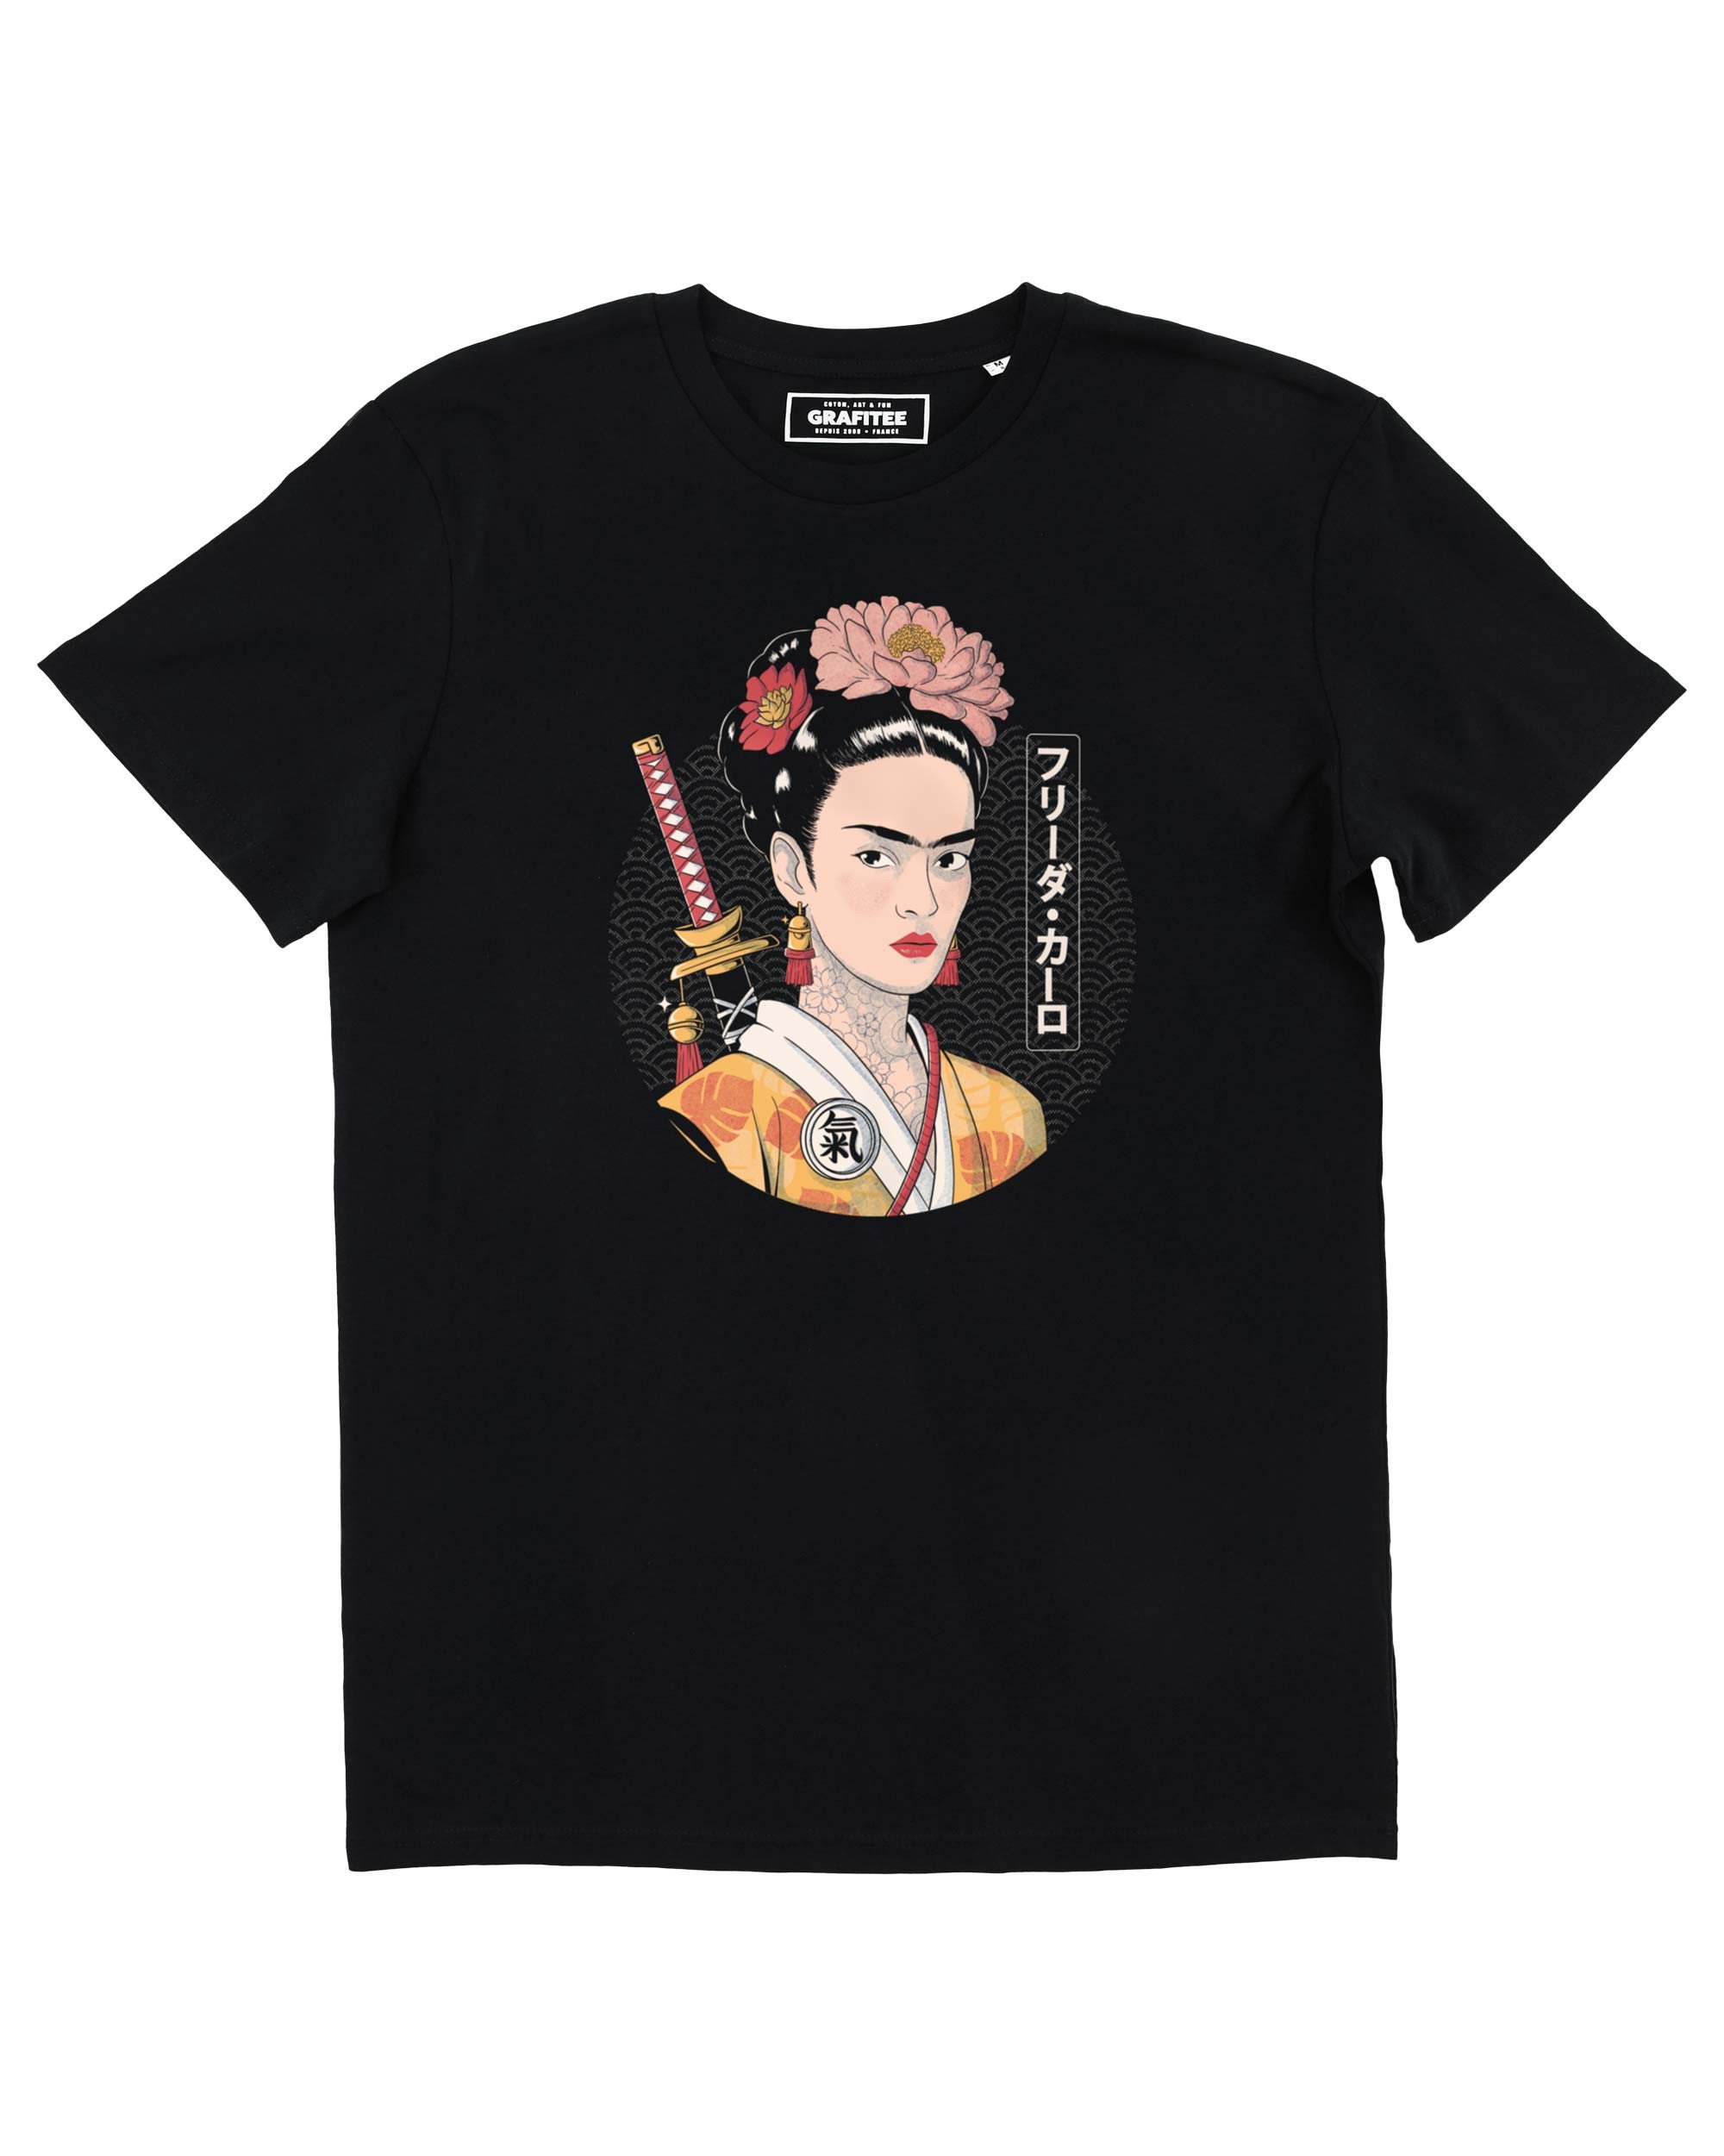 T-shirt Frida Samourai Grafitee